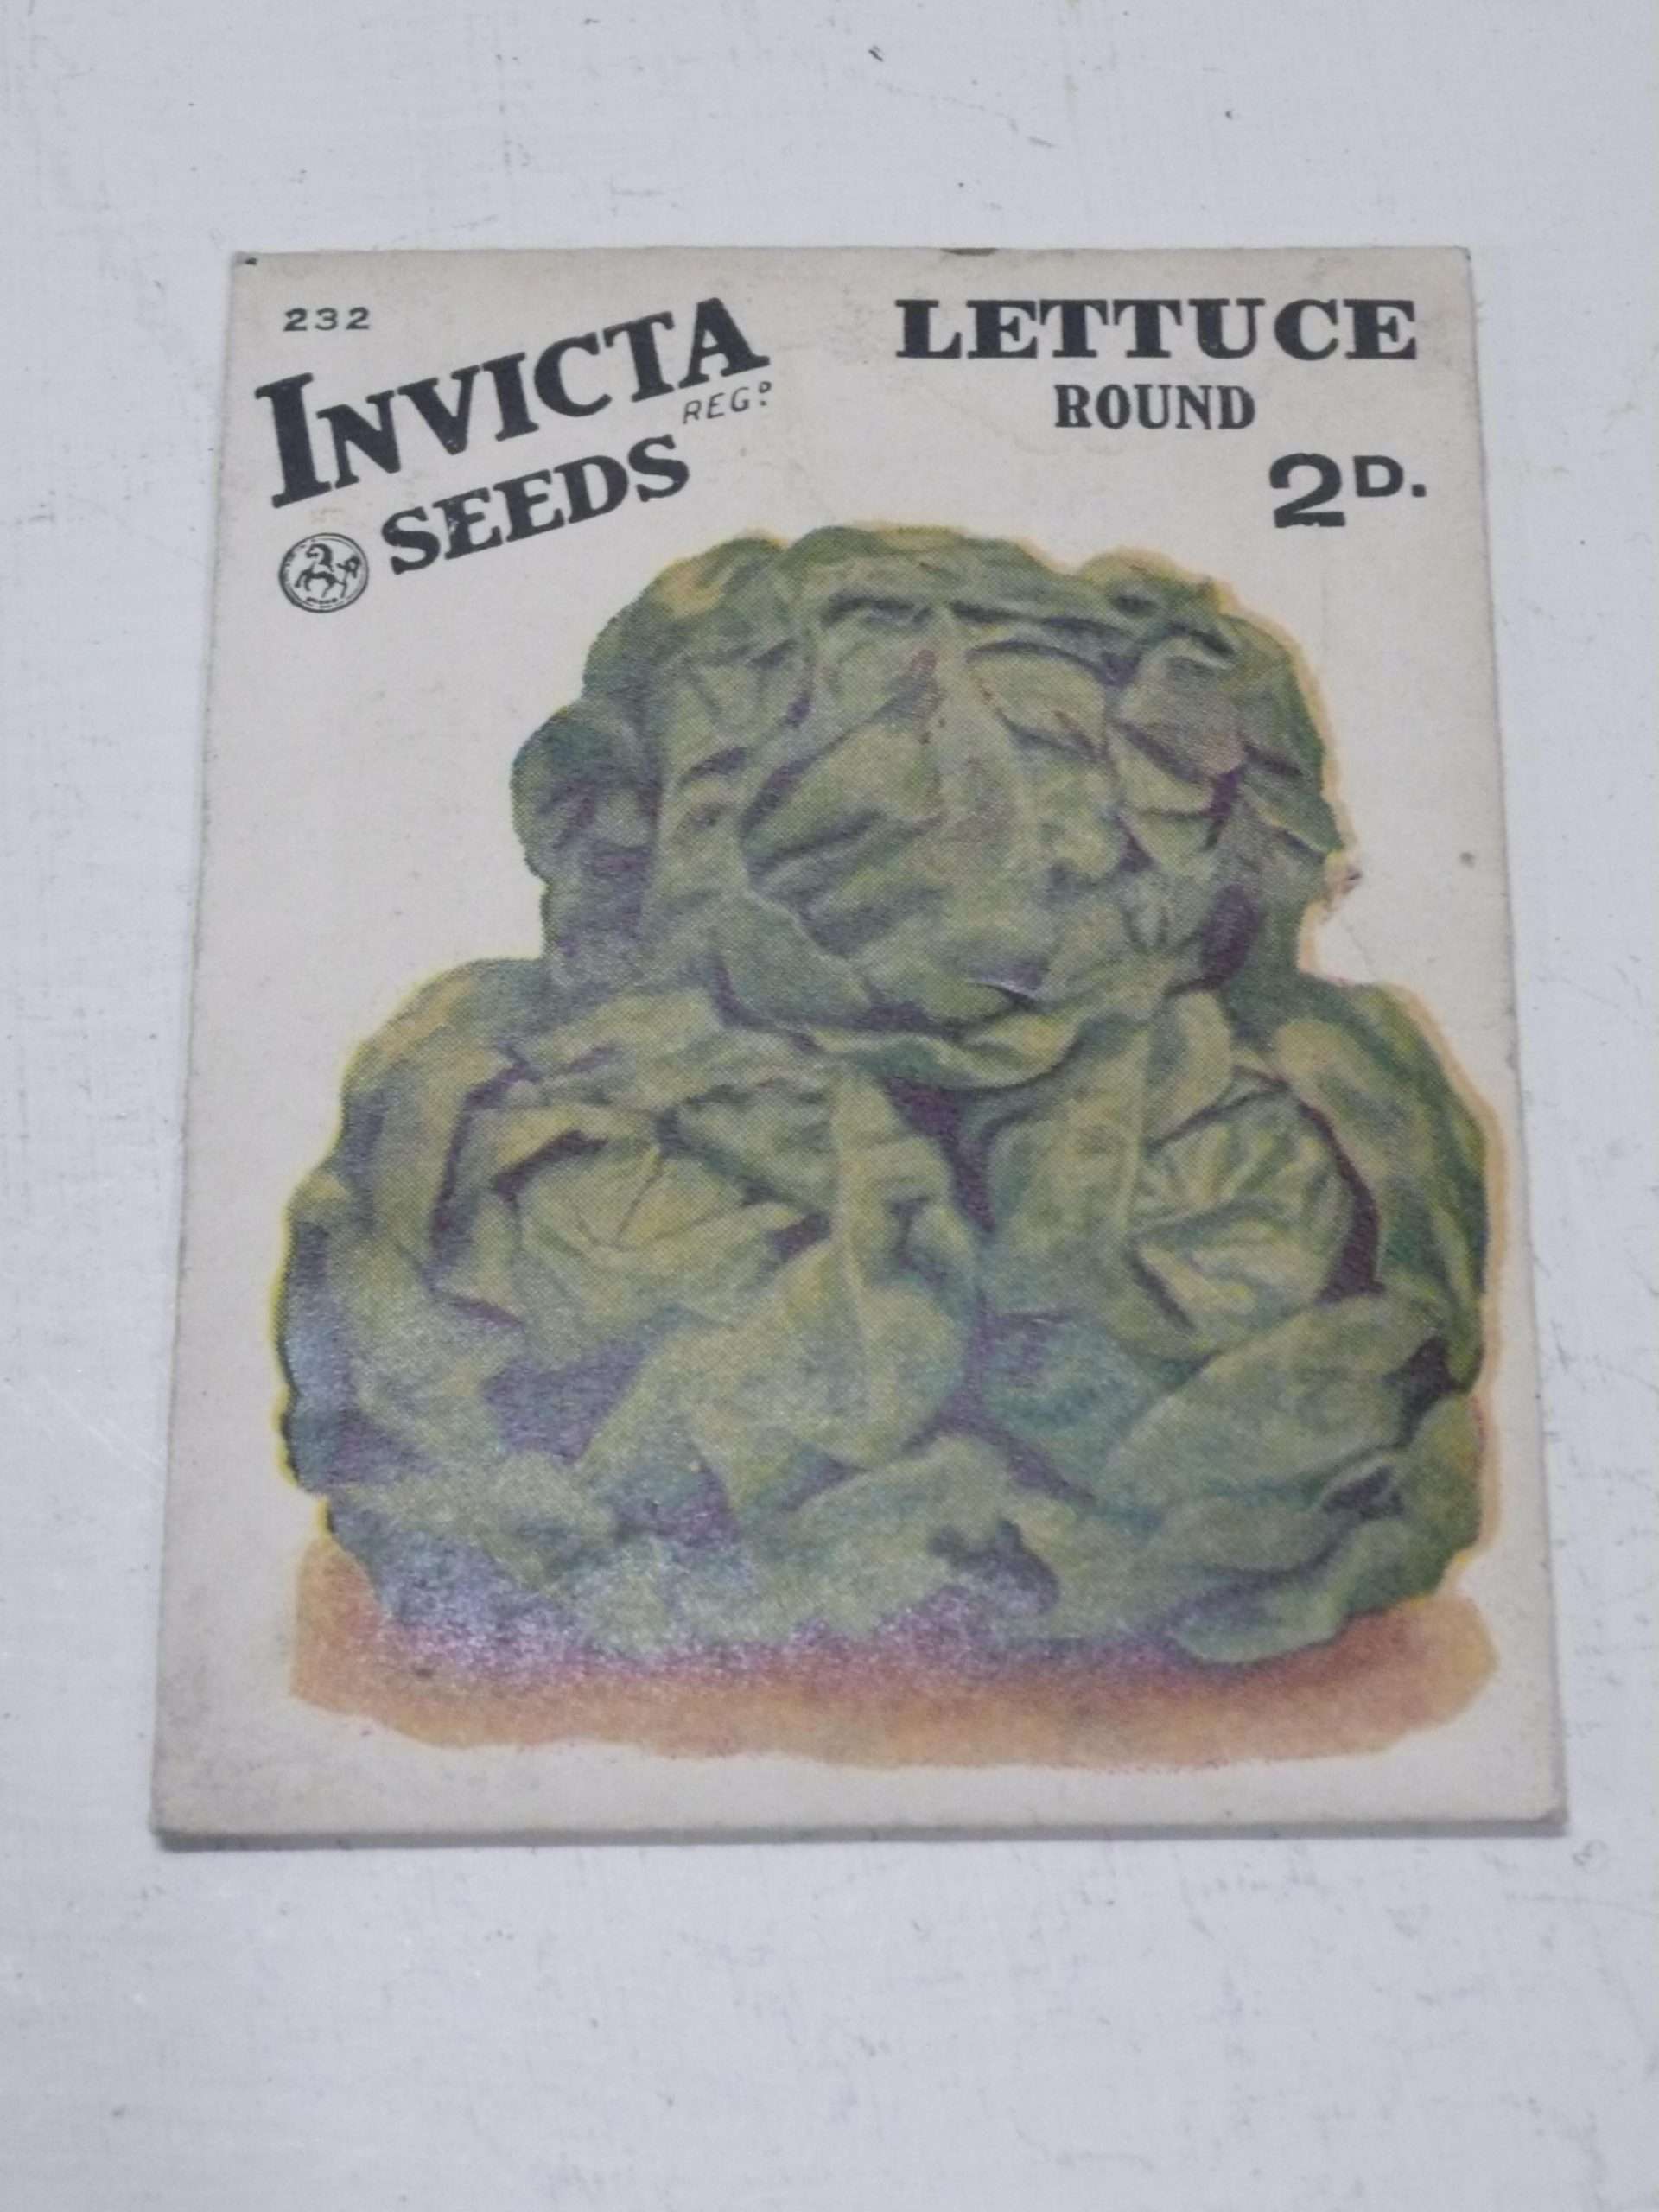 Set of Vintage Invicta Seed Packets